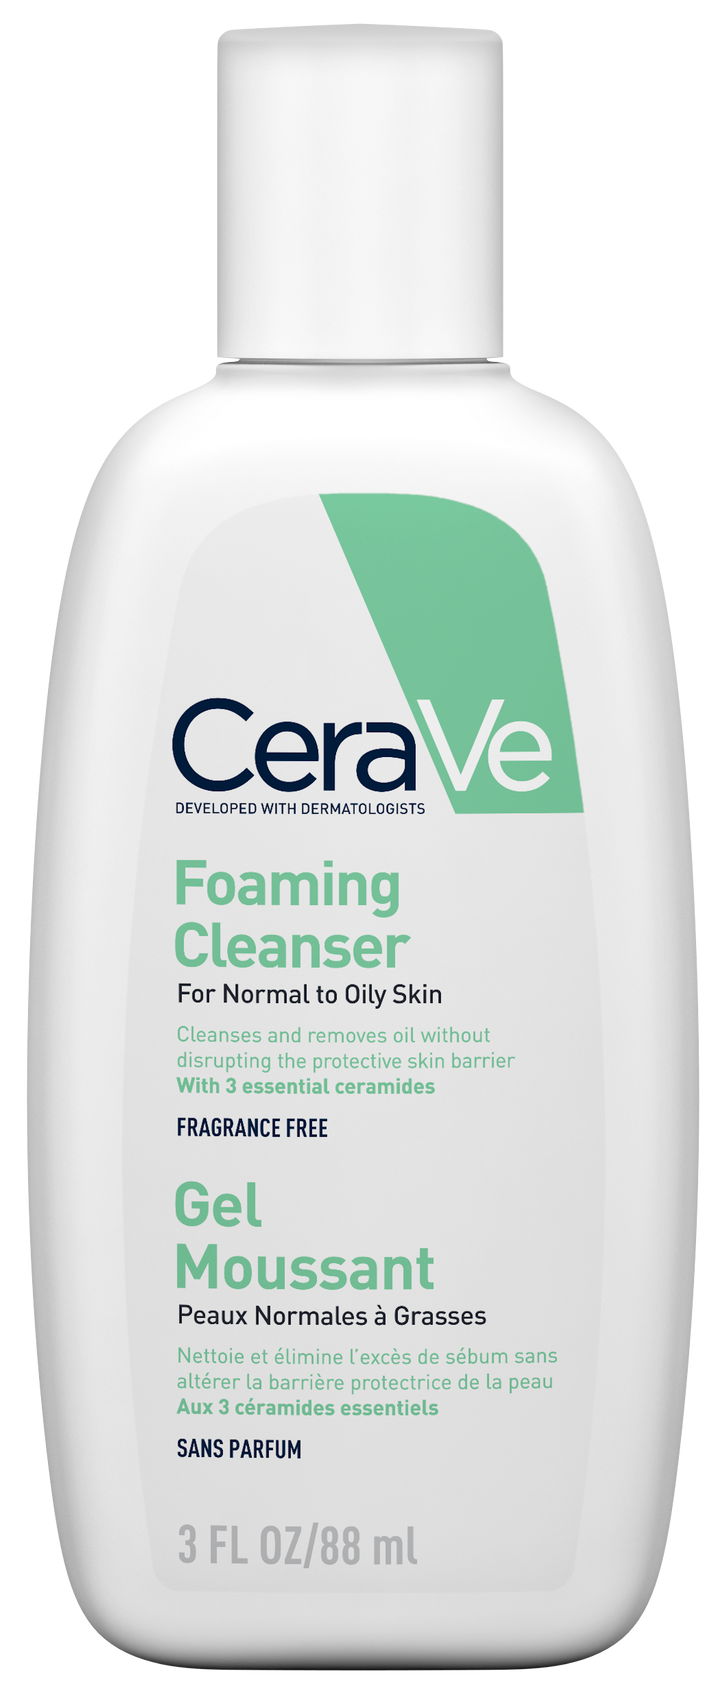 CeraVe Foaming Cleanser flacon 88ml- CeraVe - Huidproducten.nl